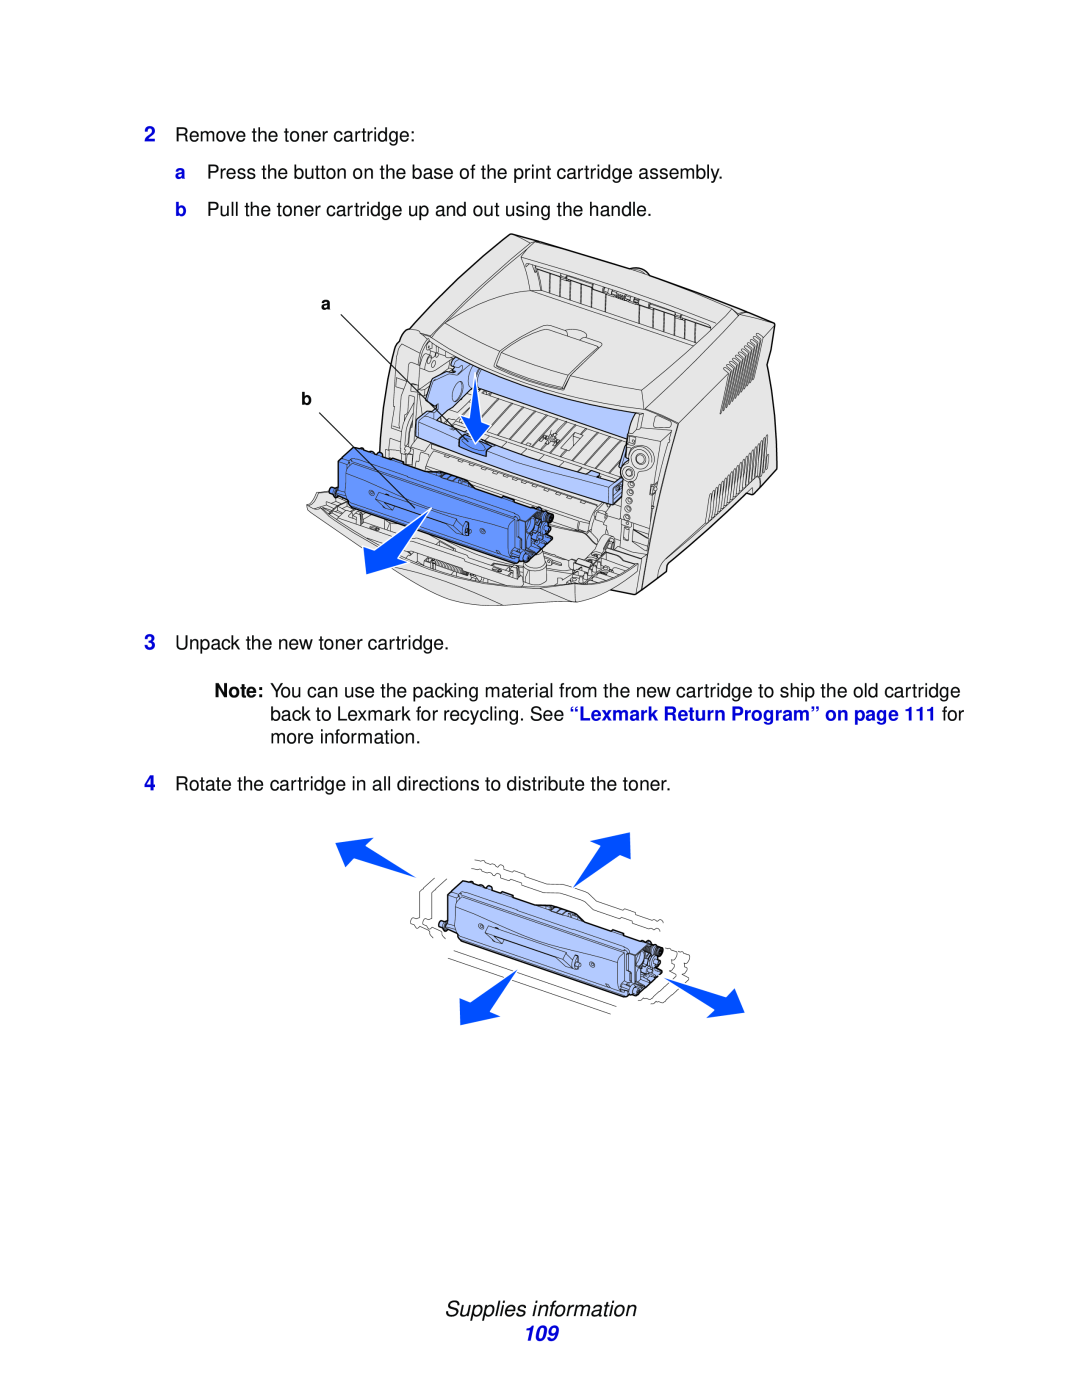 Lexmark E332n, 232, 230 manual Supplies information, Remove the toner cartridge 